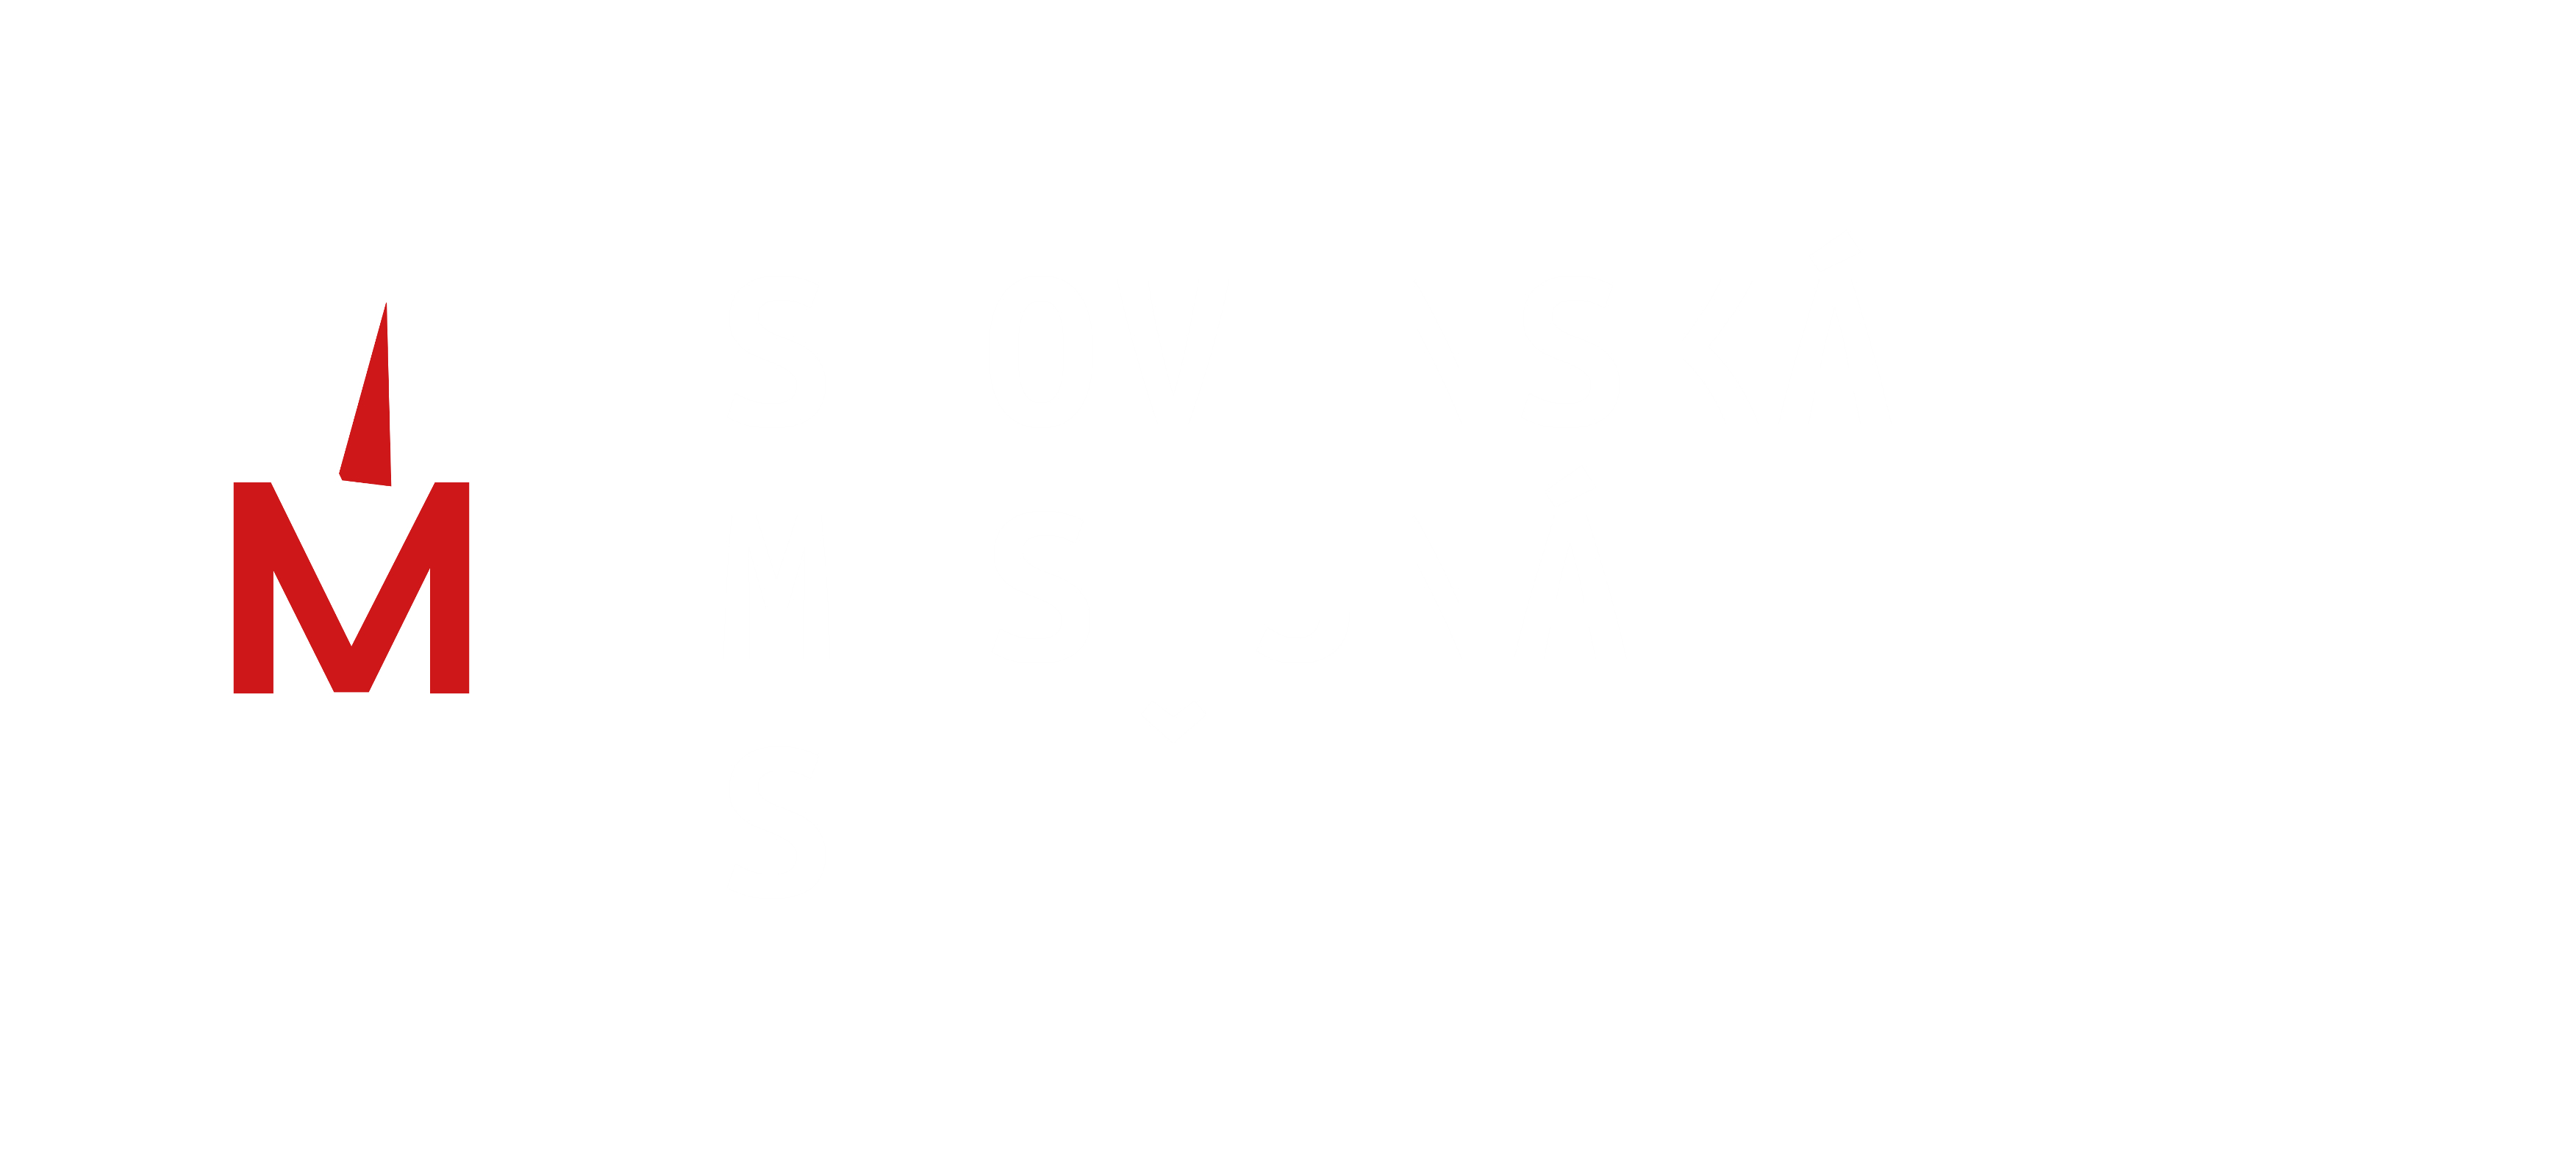 Slovenská misijná sieť